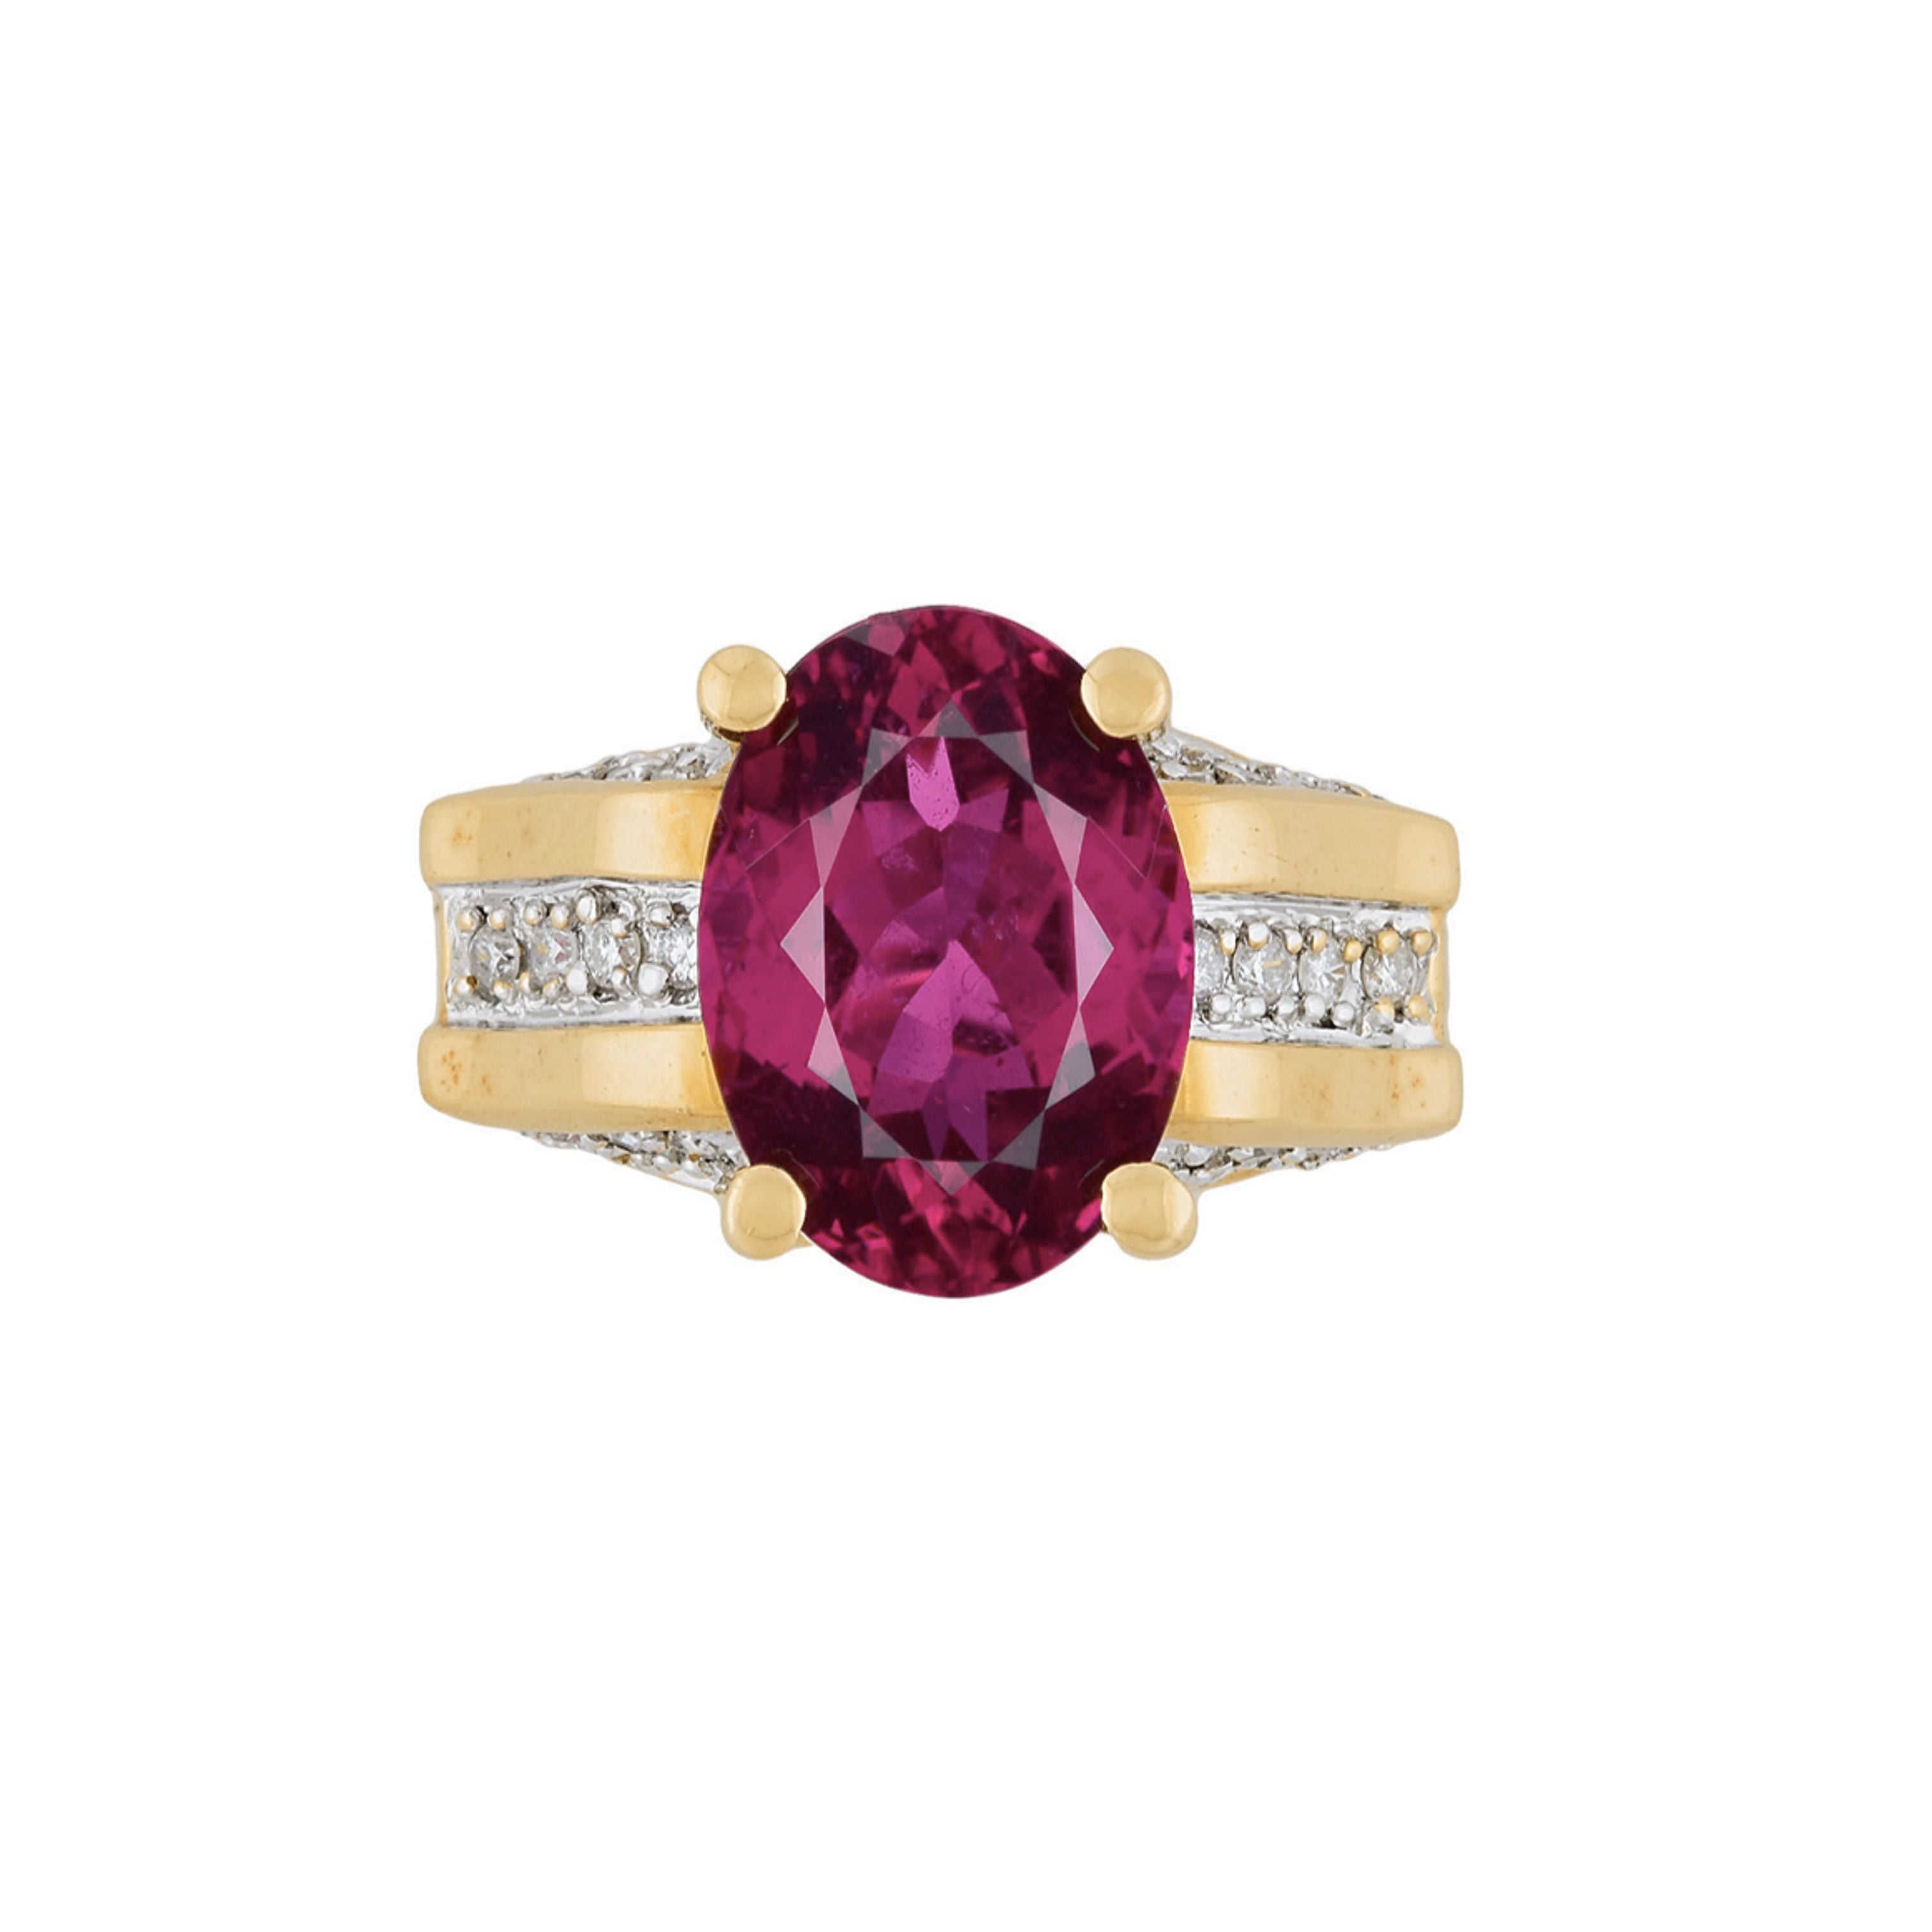 GIA-Certified-Oval-Cut-7-Carat-Purplish-Red-Tourmaline-Ring-with-Diamond-Sides-in-18K-Gold-Semi-Precious-Jewelry.jpg